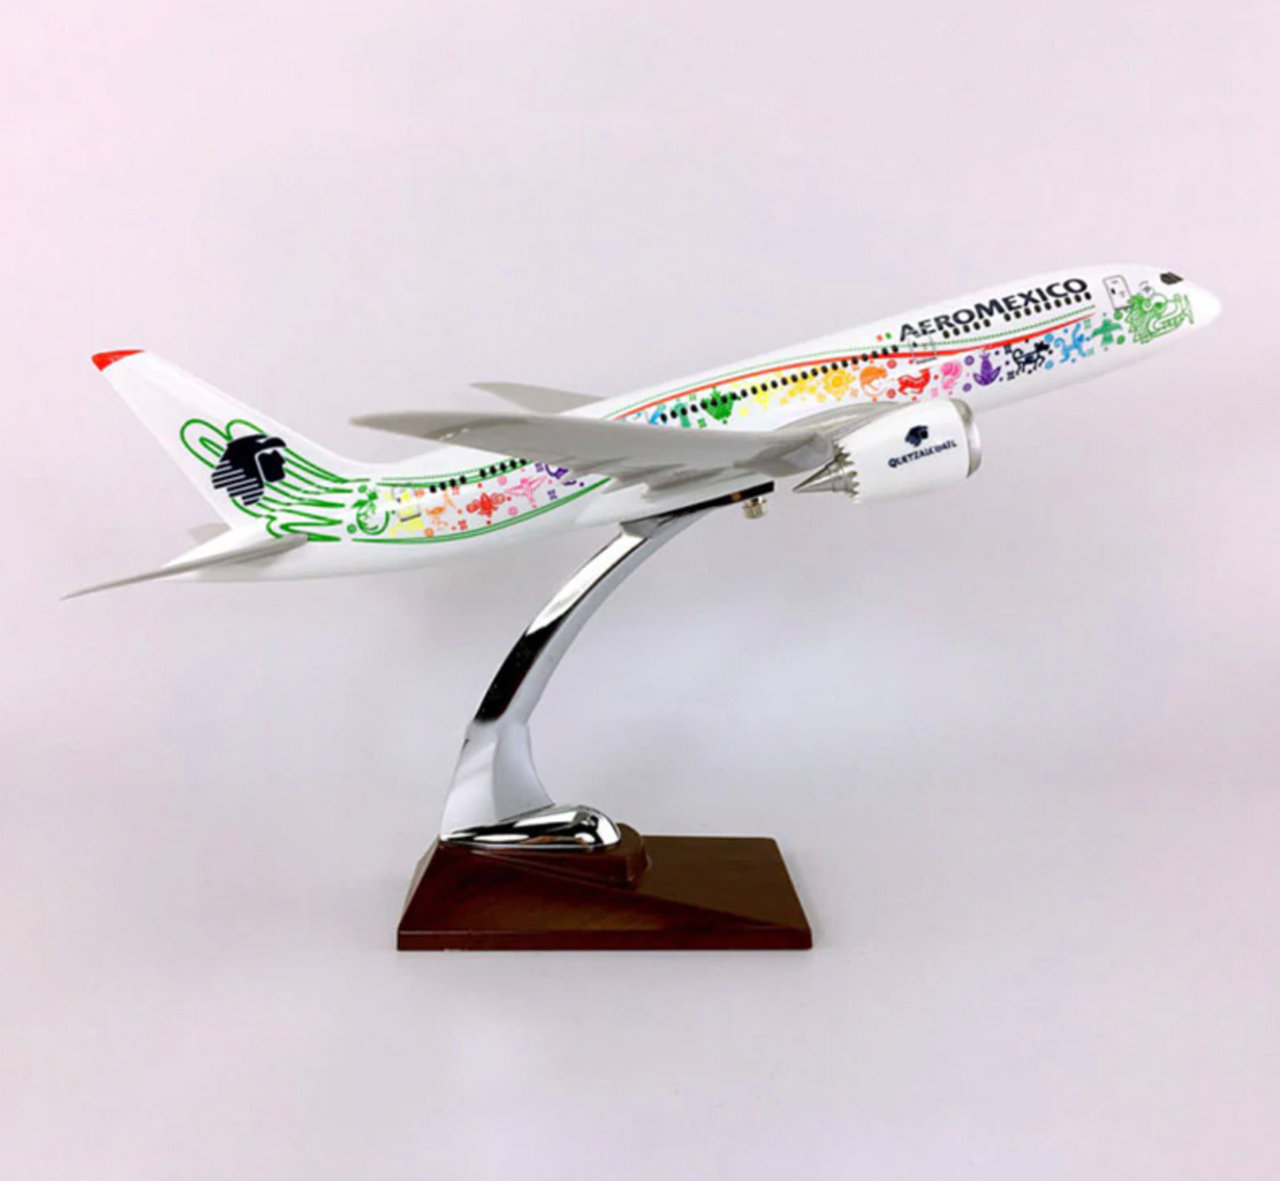 AeroMexico Boeing B787-800 Dreamliner (36CM) Airplane Model